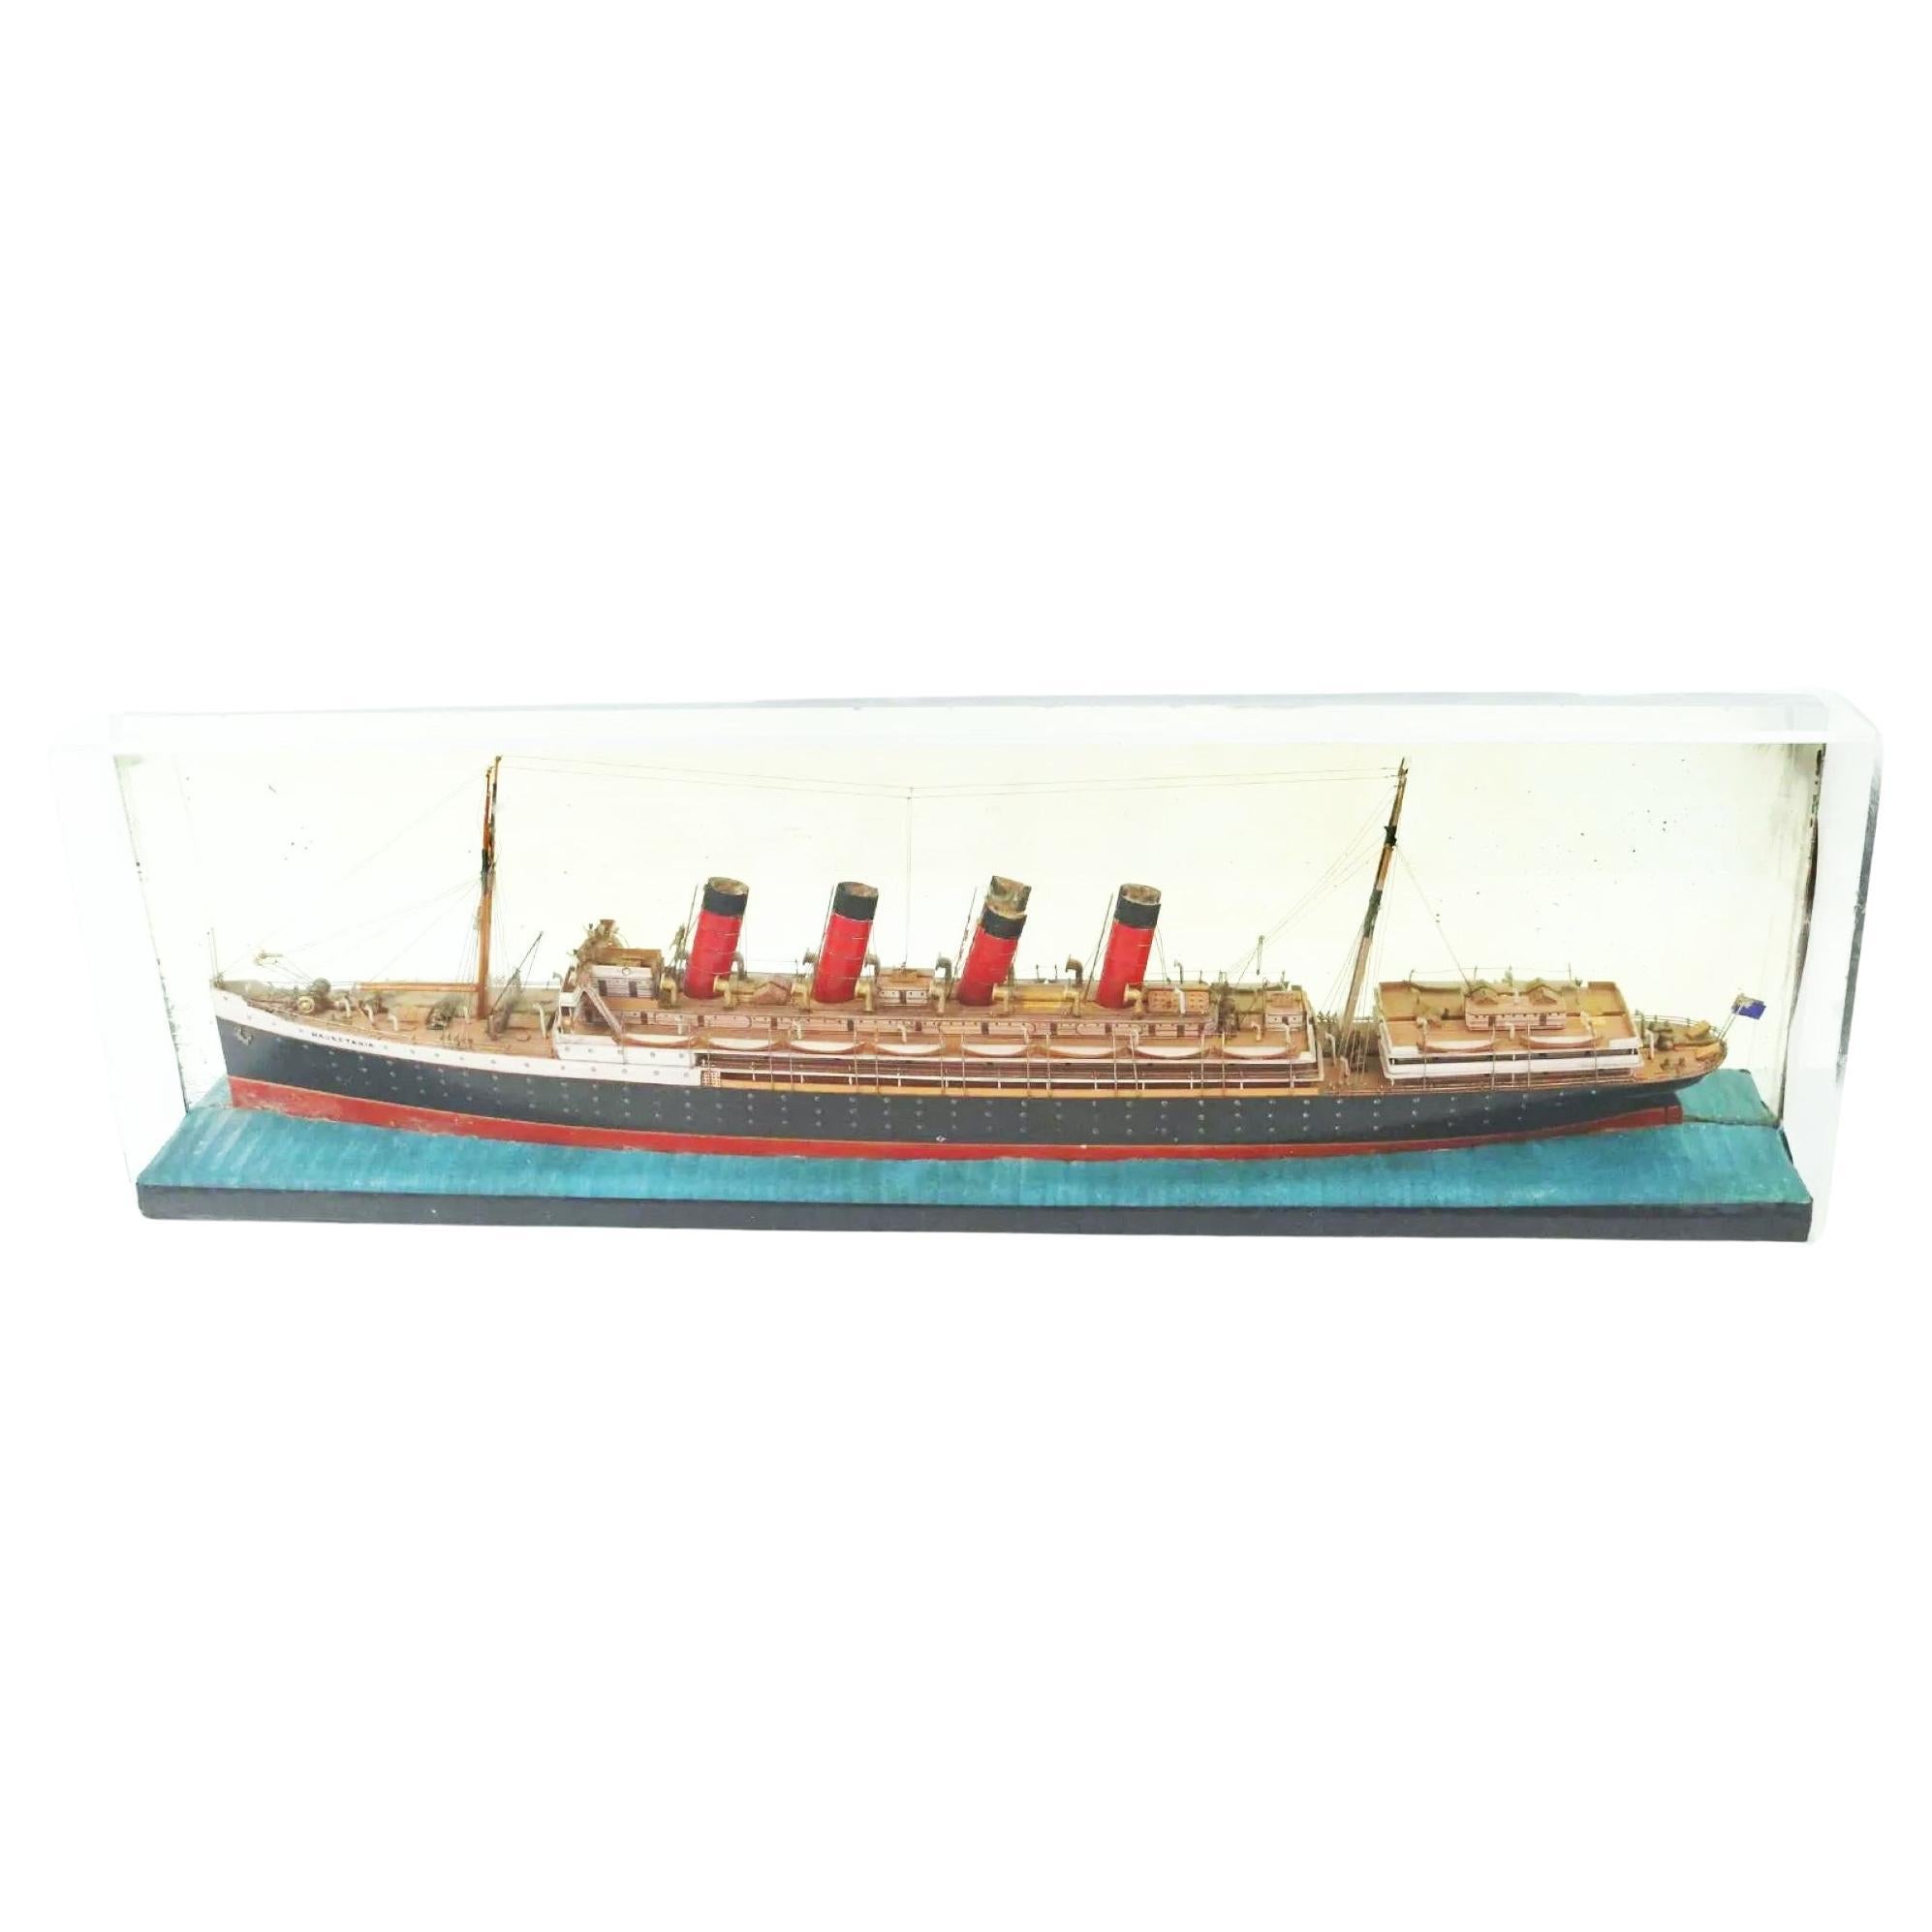 Half-model of Ocean Liner “Mauretania” For Sale